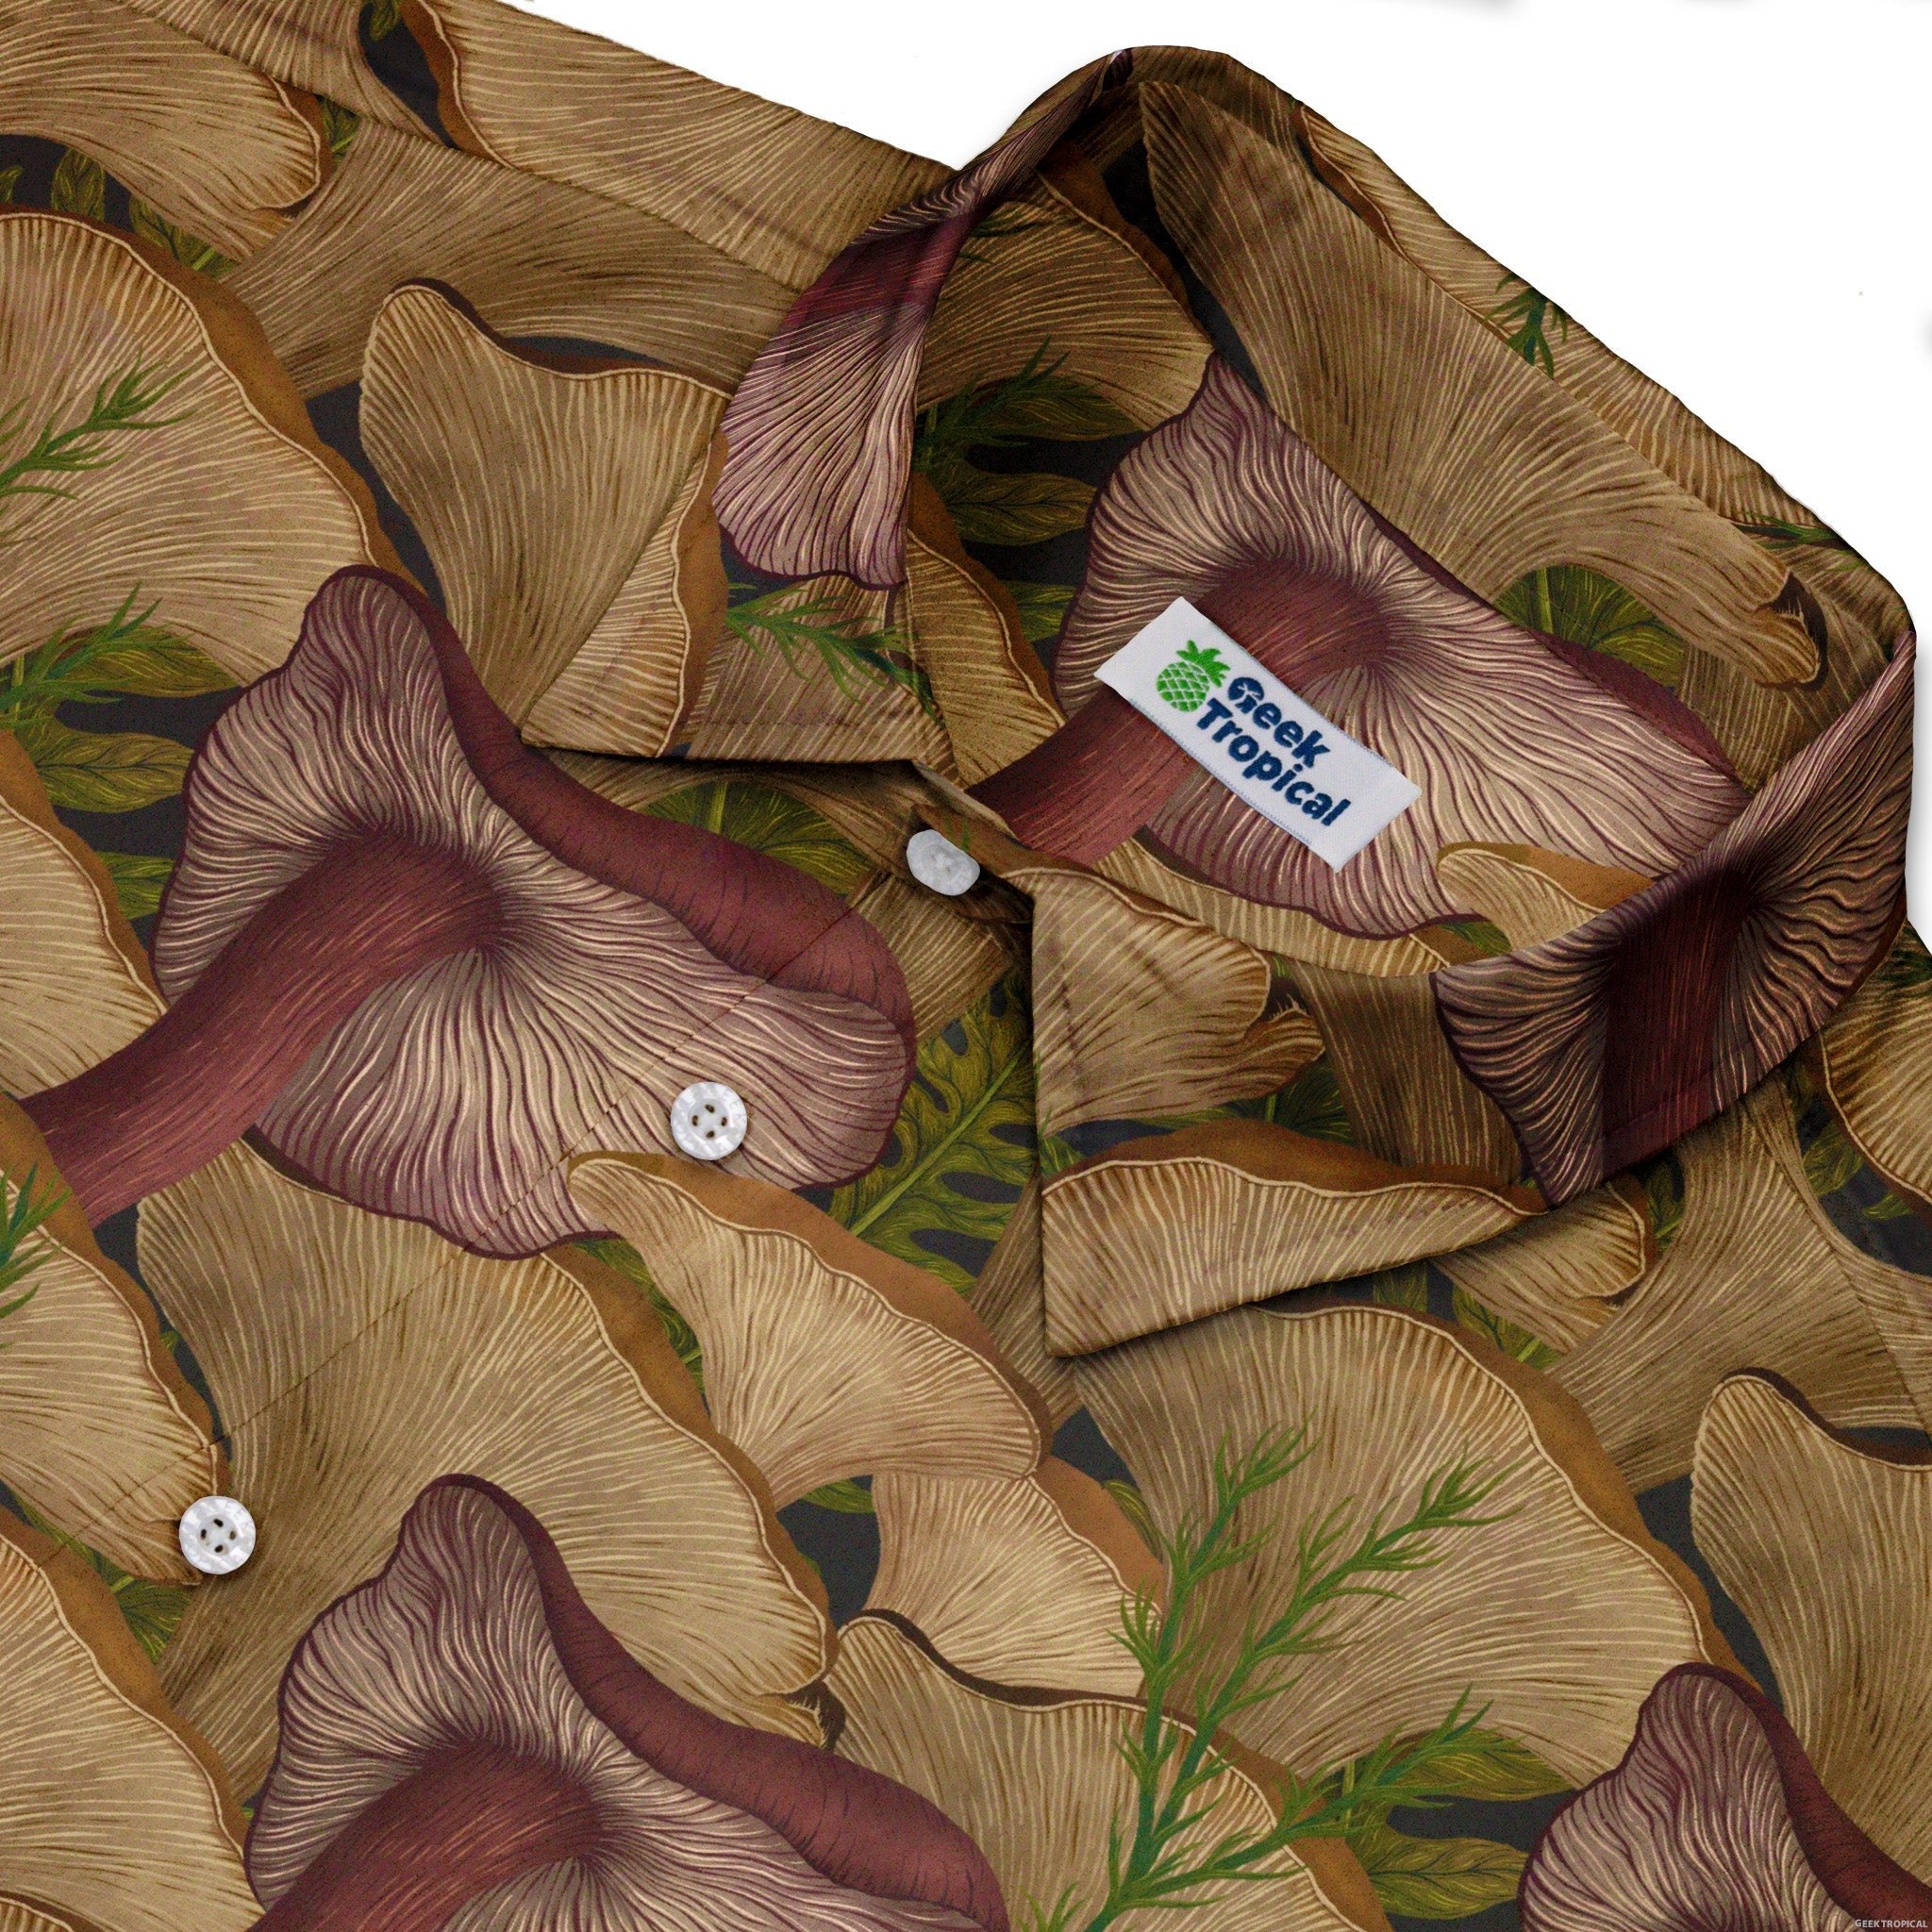 Episodic Oyster Mushroom Button Up Shirt - XS - Hawaiian Shirt - No Pocket -